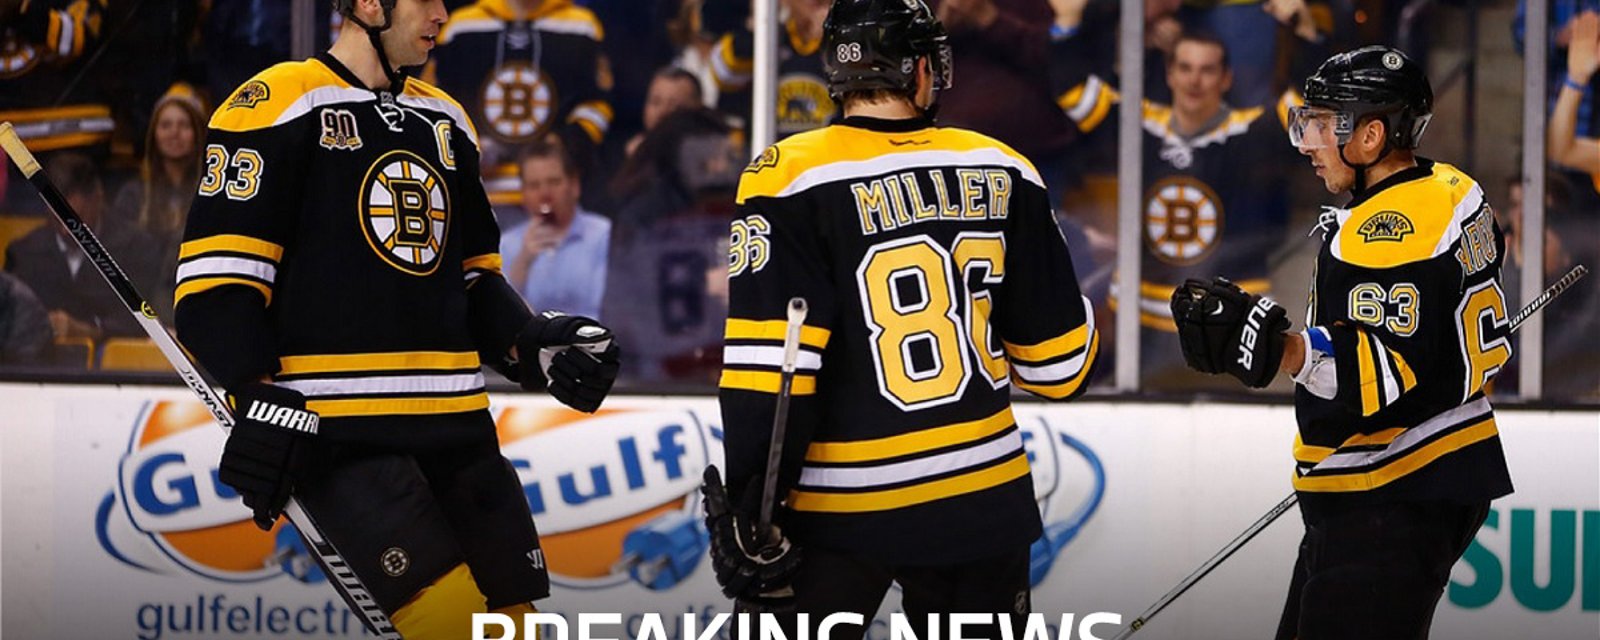 Breaking: Bruins veteran injured at practice on Friday.